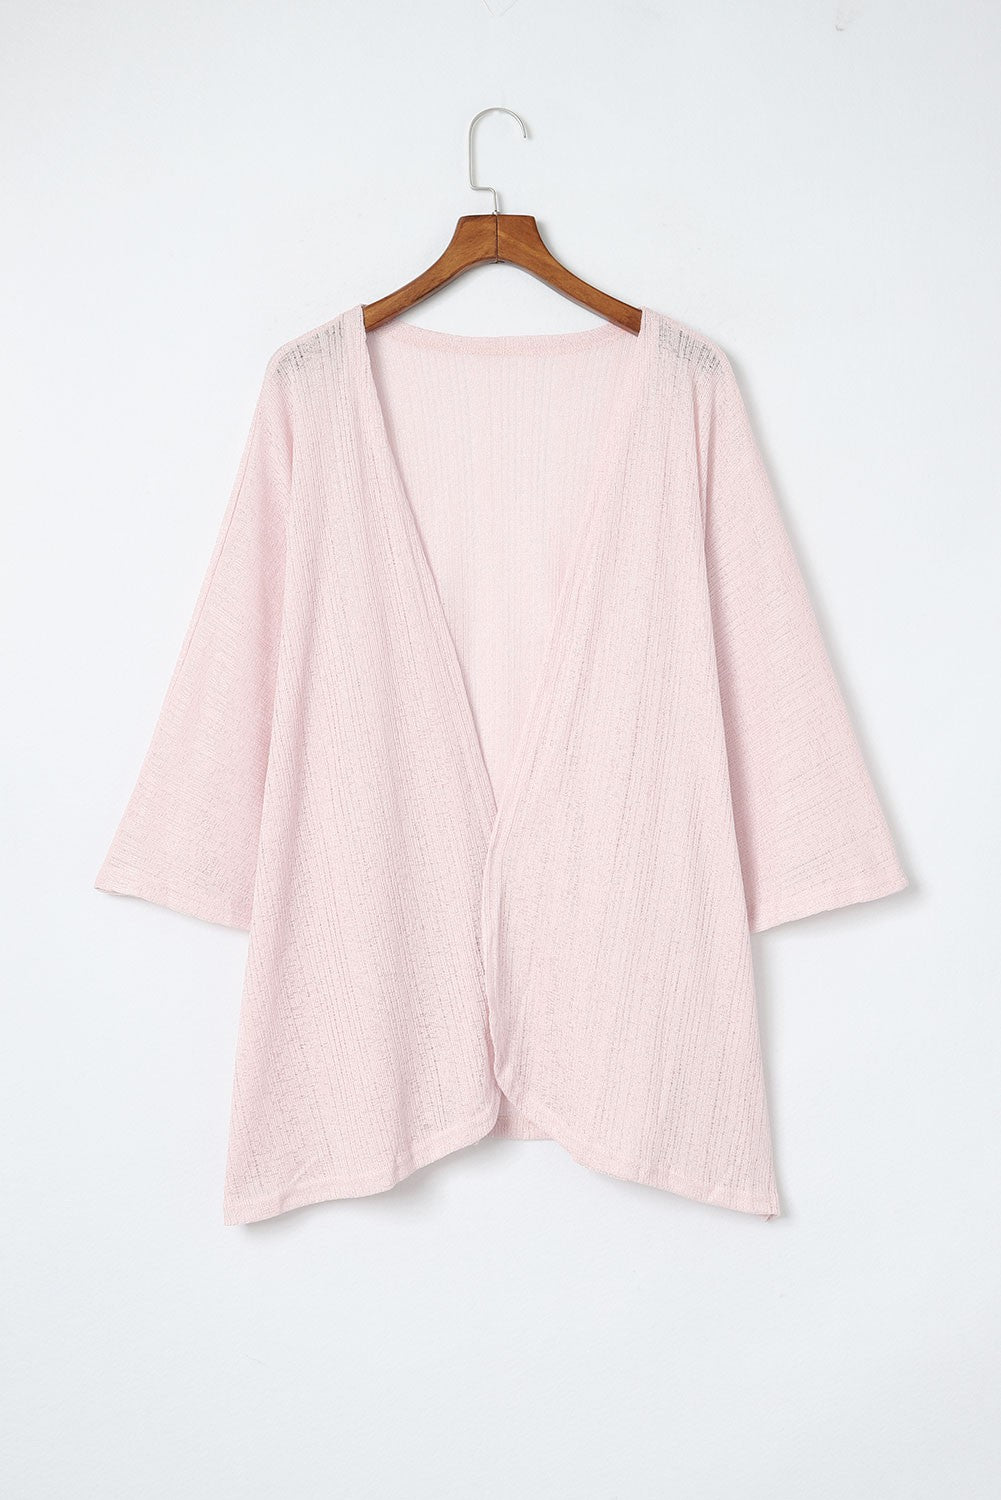 Adelaide Lightweight Half – Jack Monroe Boutique Light & Sleeve One Pink Cardigan - Size 